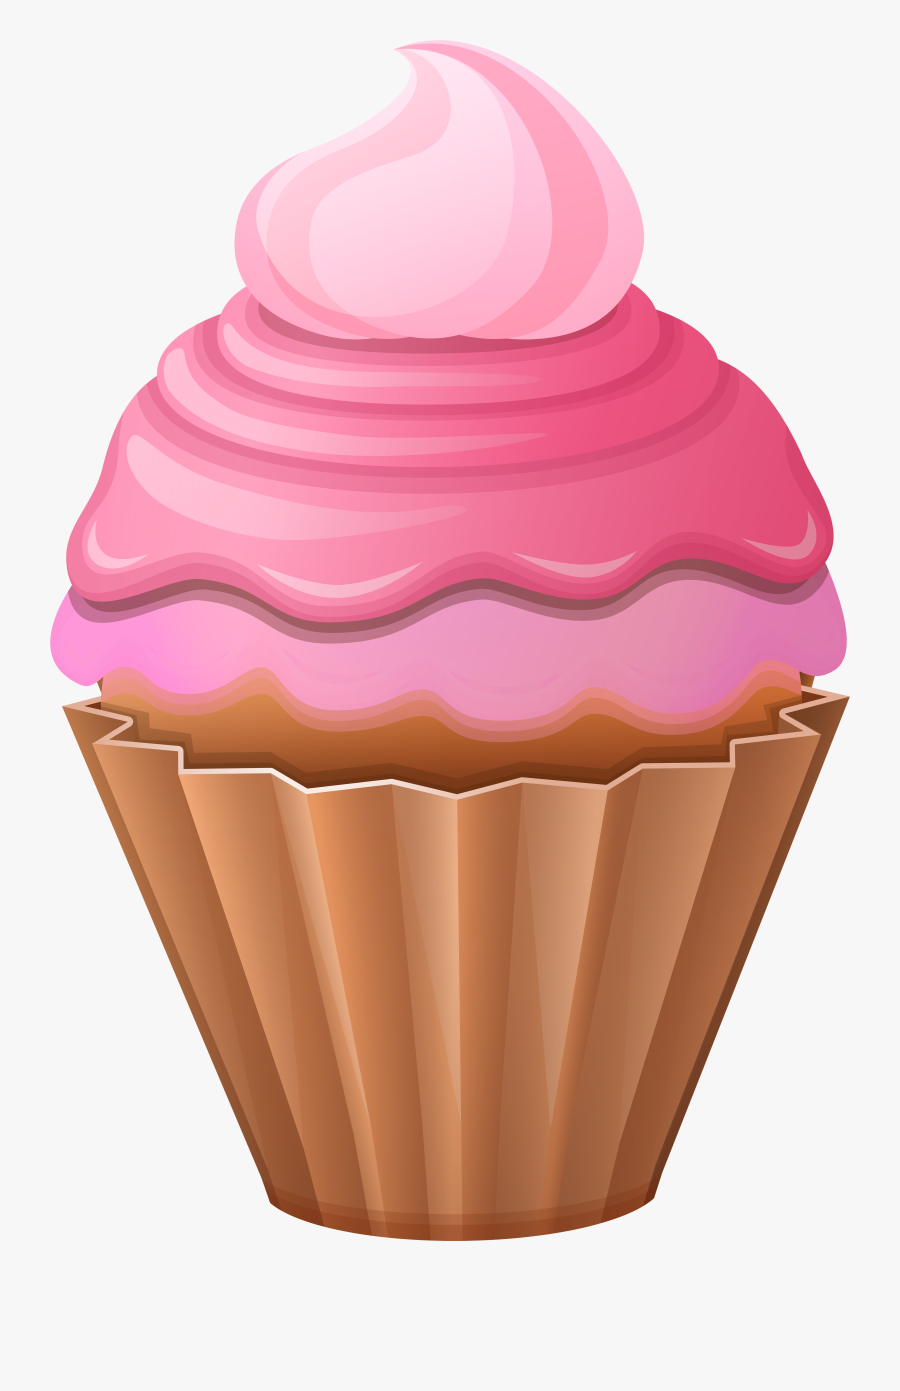 Png Clip Art Image - Cupcake, Transparent Clipart